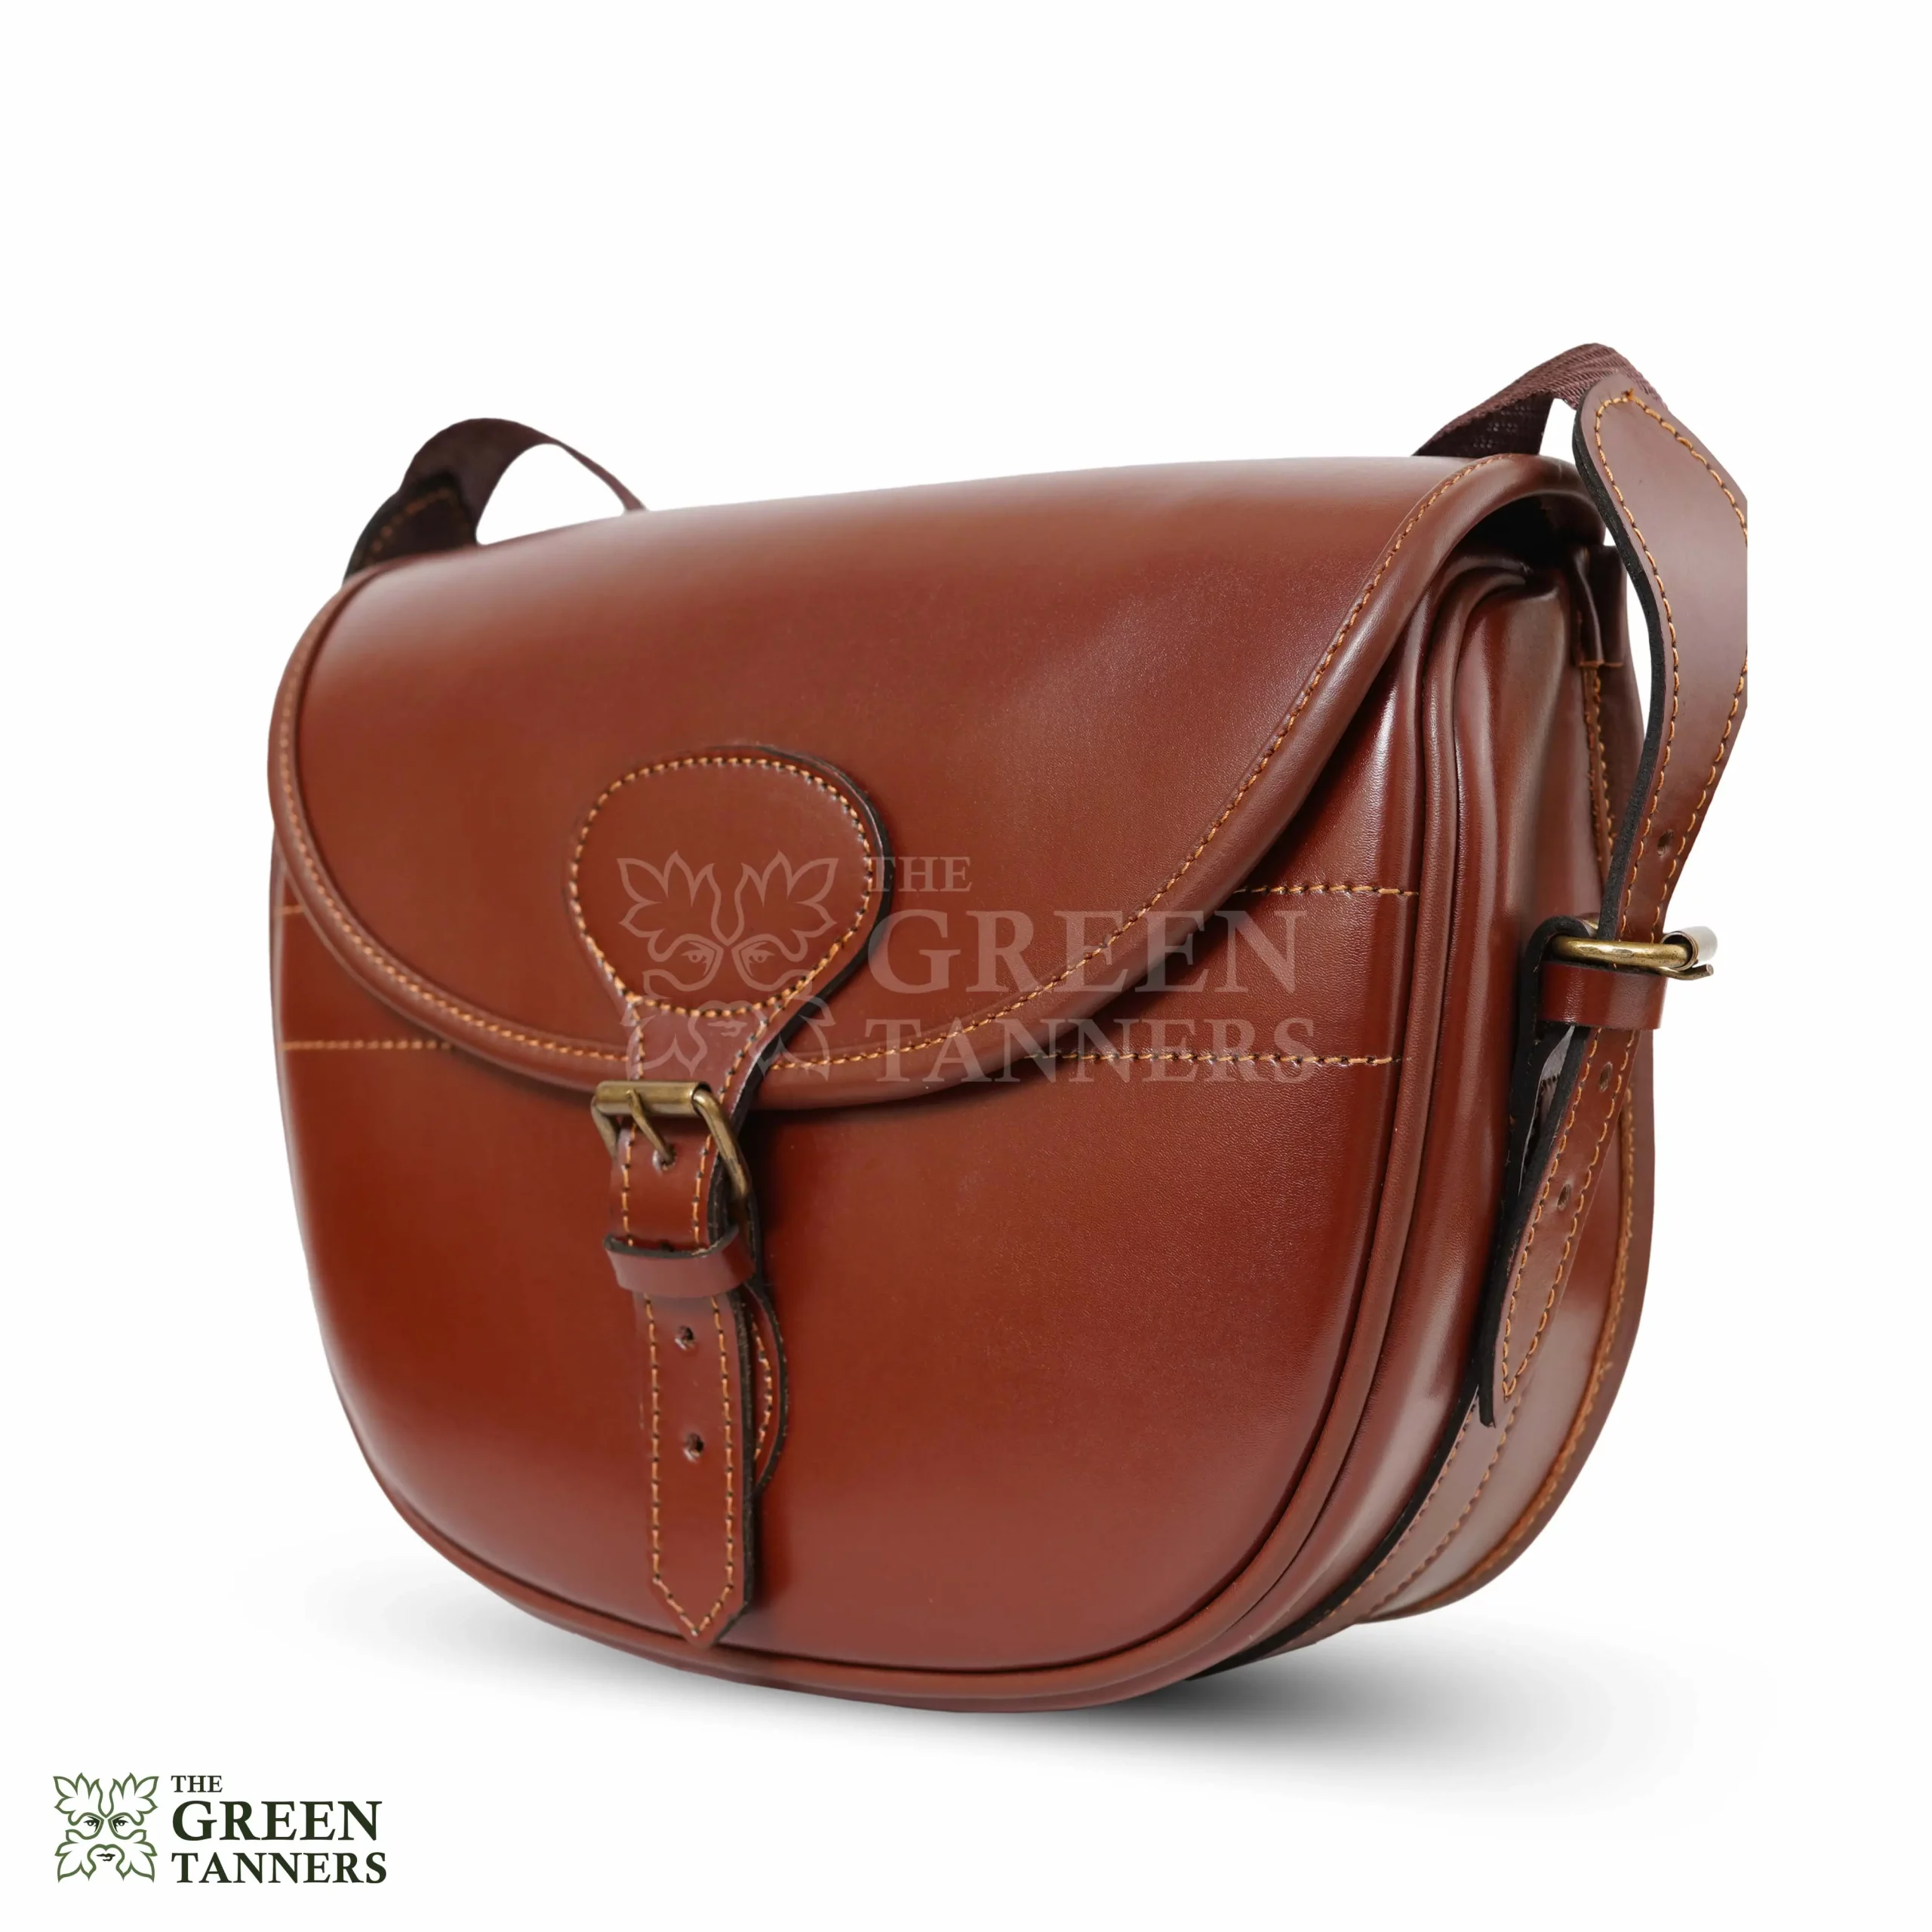 Leather Cartridge Bag, Maroon Leather Bag